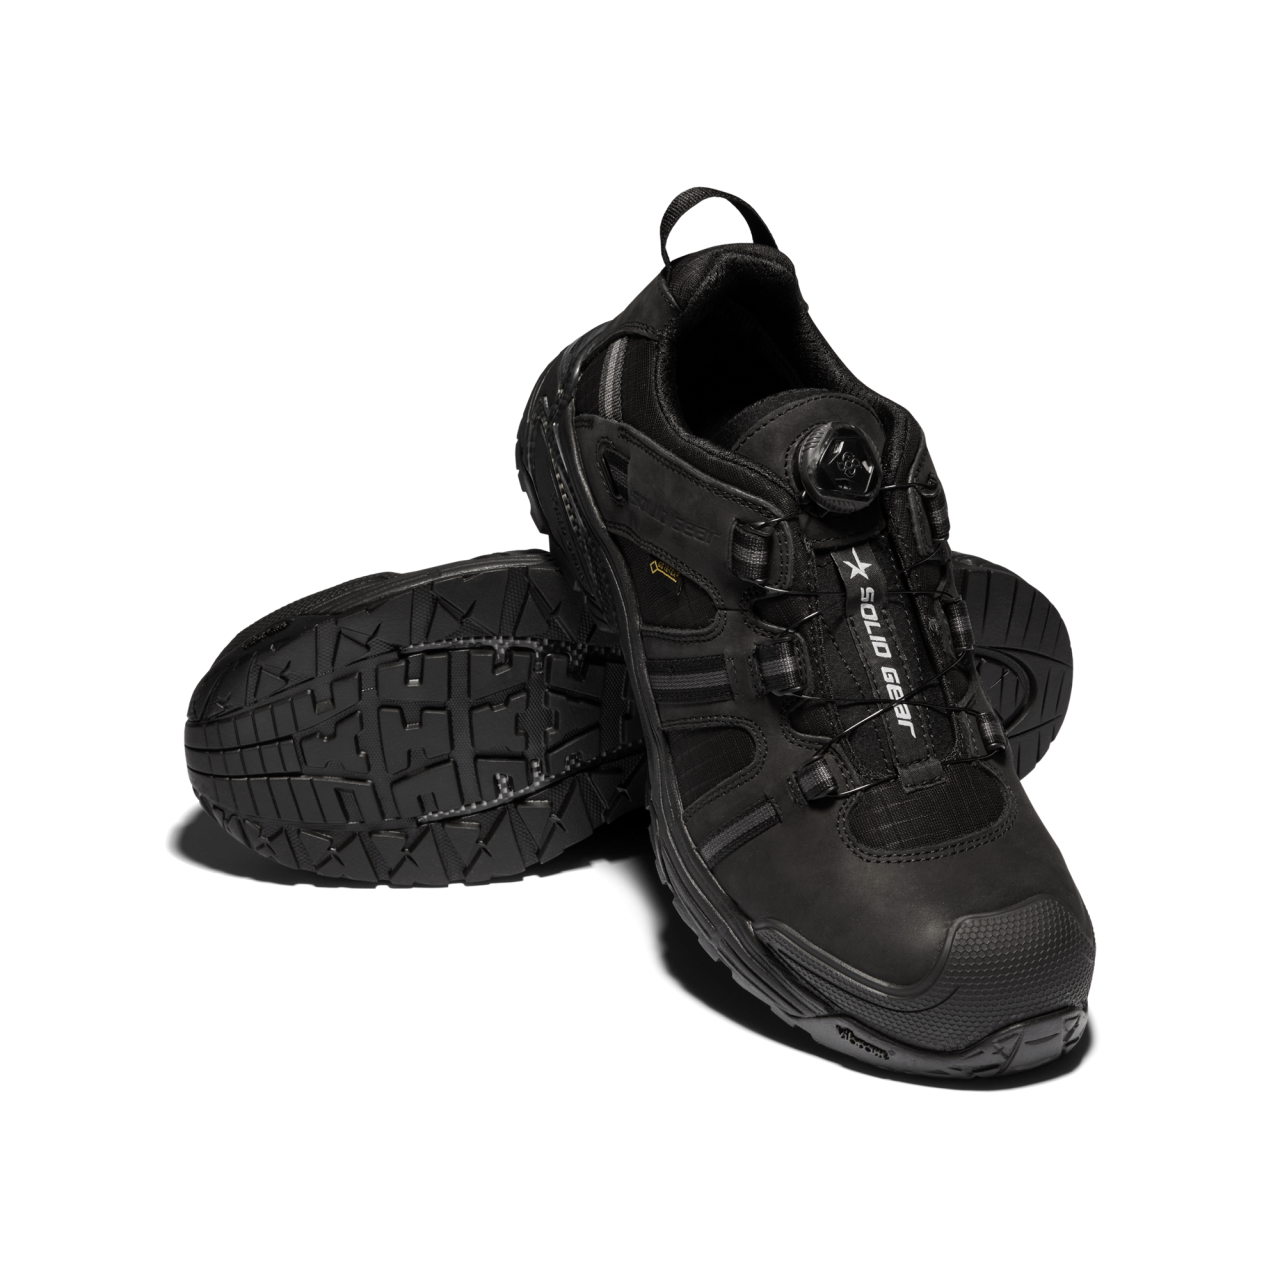 Zapato de seguridad S3 Enforcer GTX talla 45